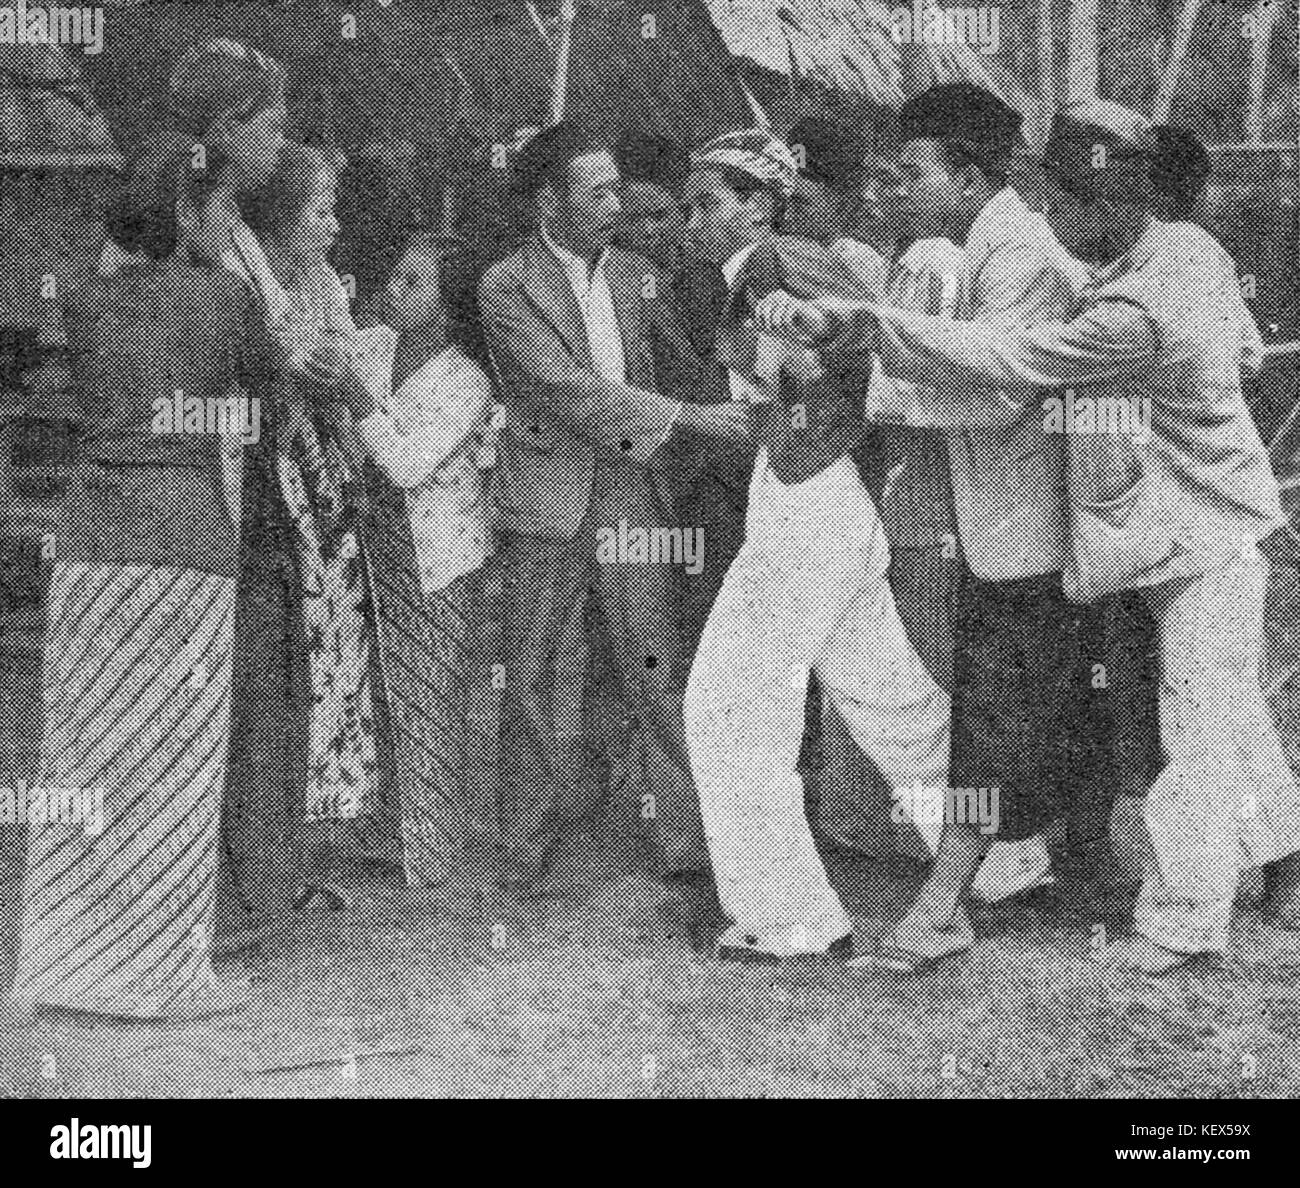 Darma punching Soemengkar, Pantjawarna, p66 Stock Photo